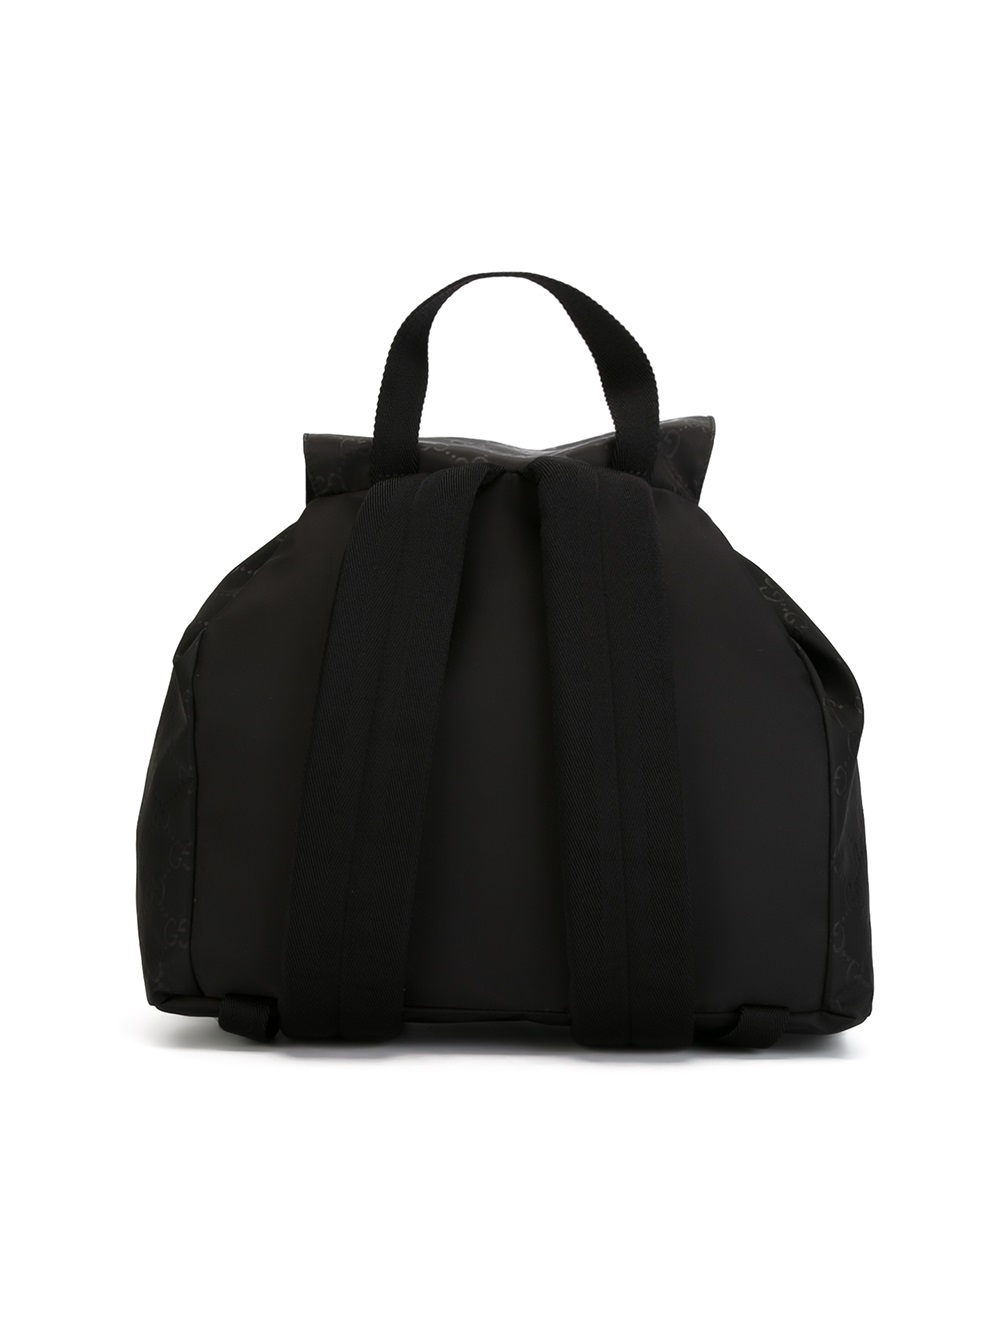 Auth GUCCI Backpack Hand Bag Black leather nylon rucksack high capacity